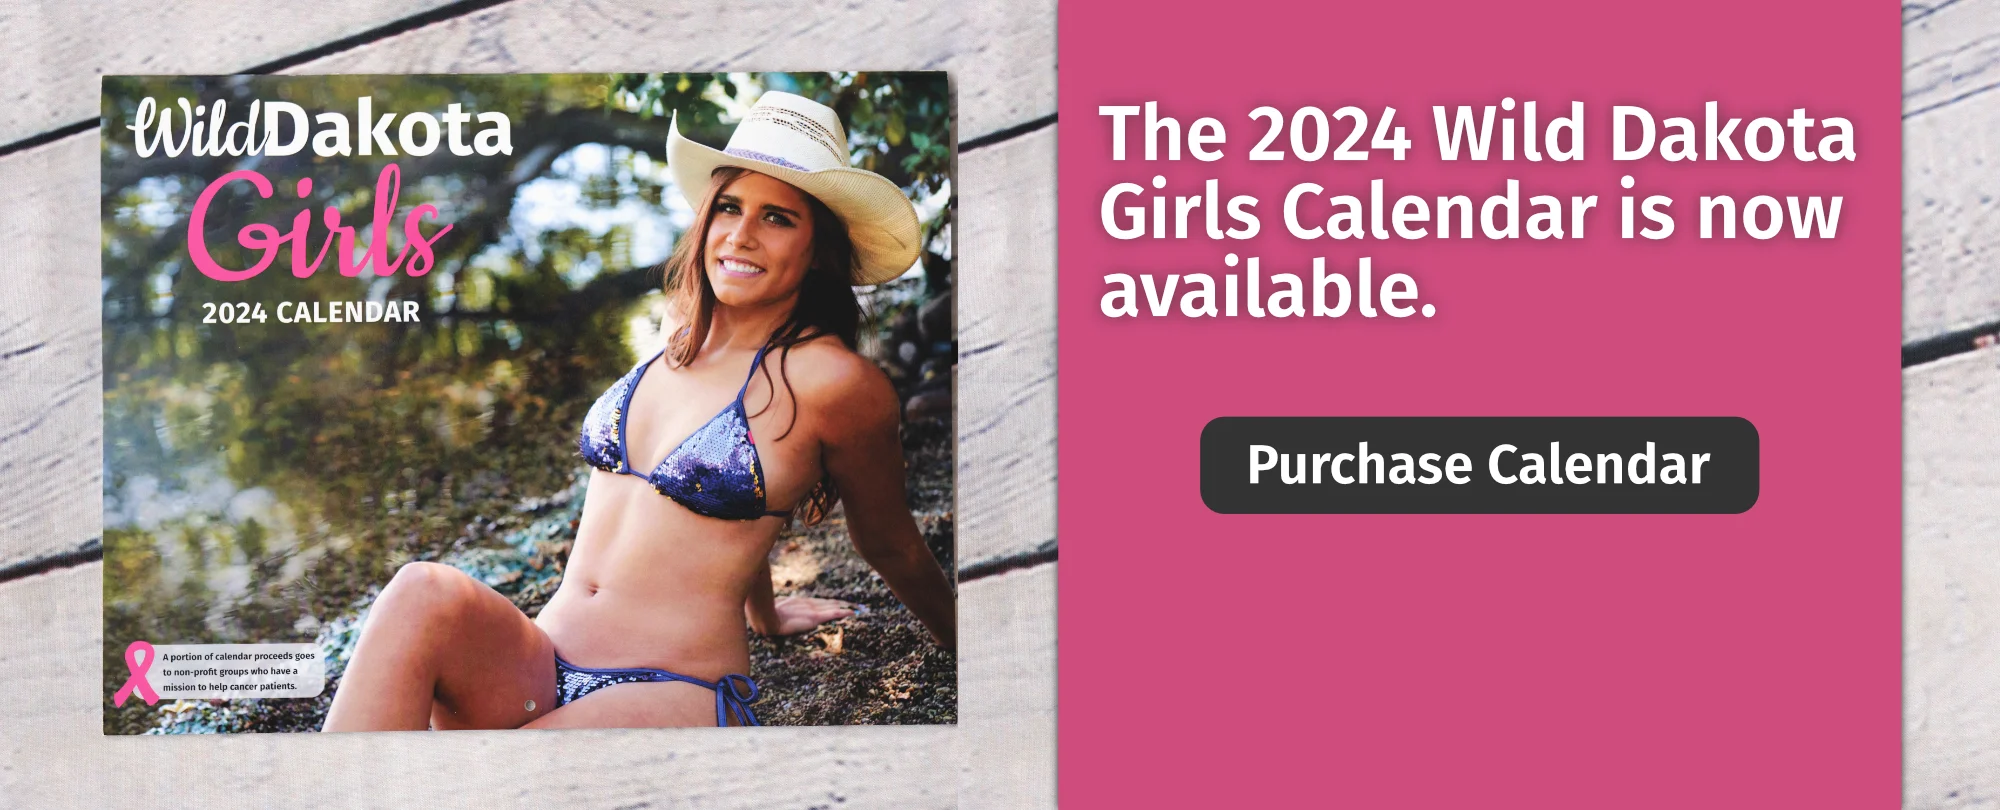 Wild Dakota Girls 2024 Calendar.  2024 Wild Dakota Girls Calendar is now available.  Purchase calendar.